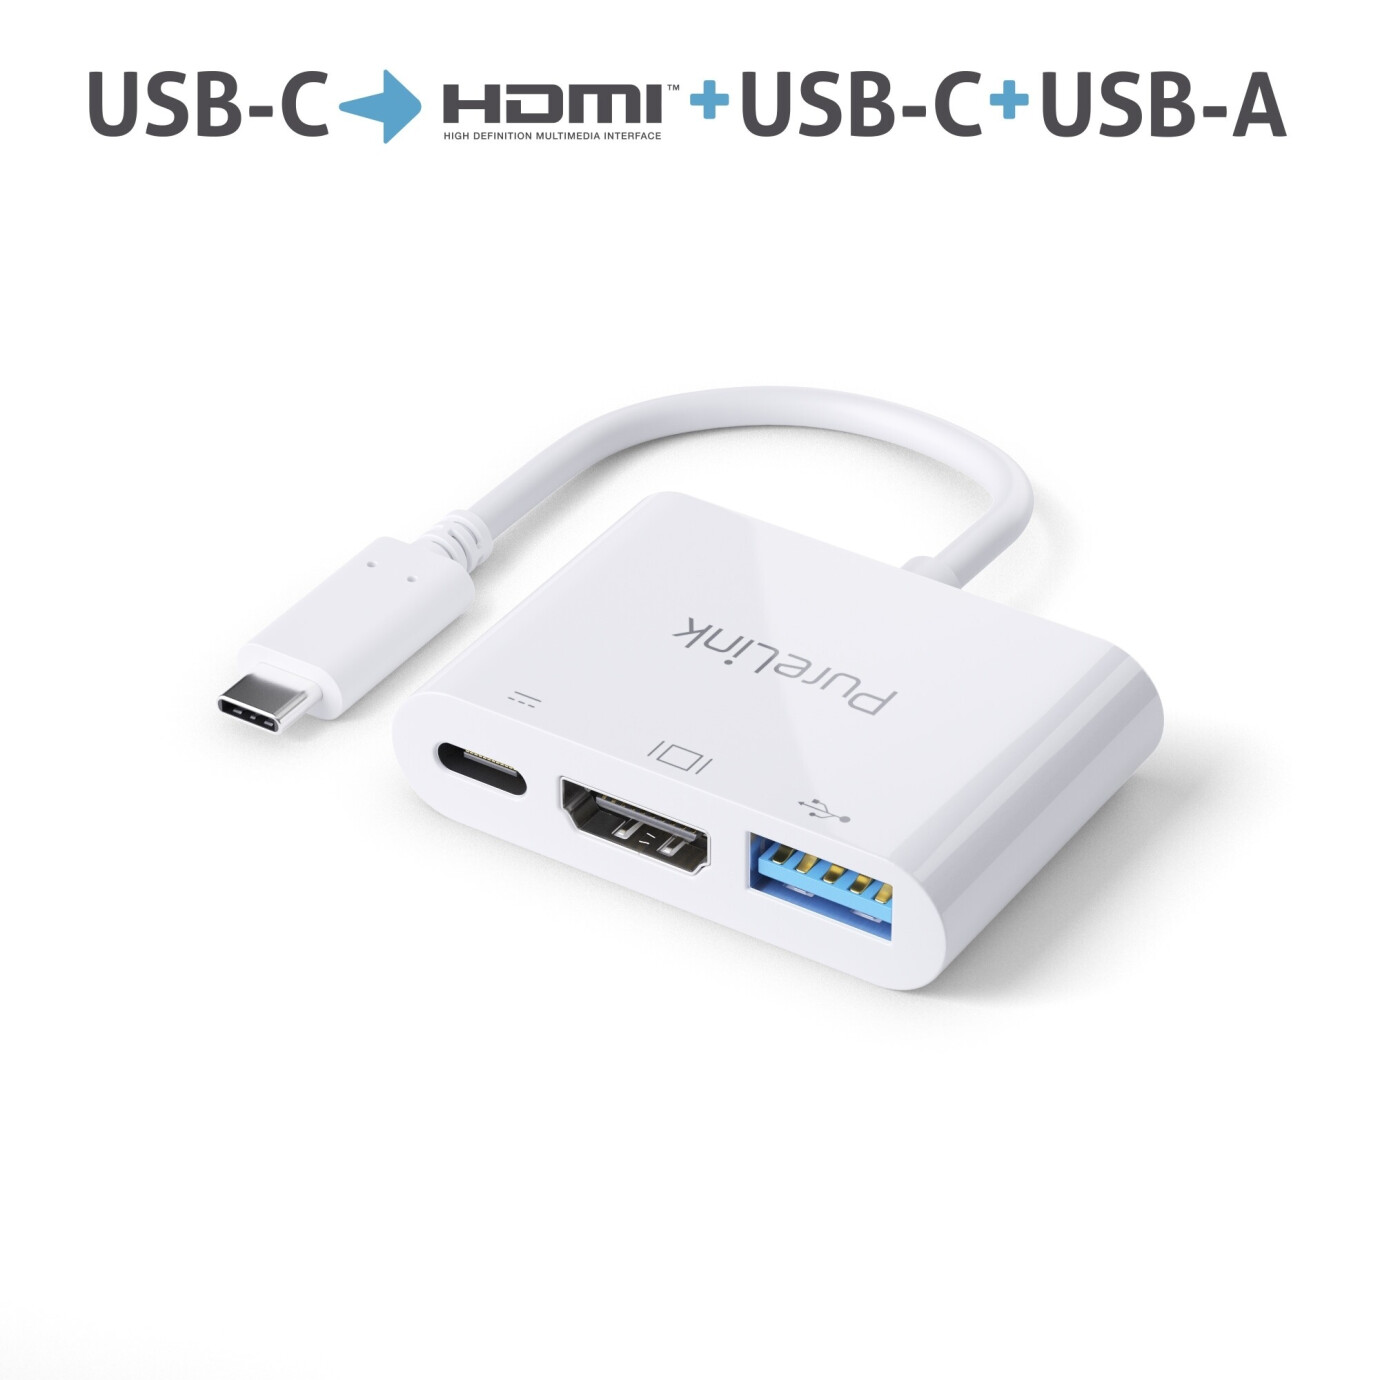 Purelink IS270 USB-C auf HDMI, USB-C, USB-A Adapter 0,10m weiß